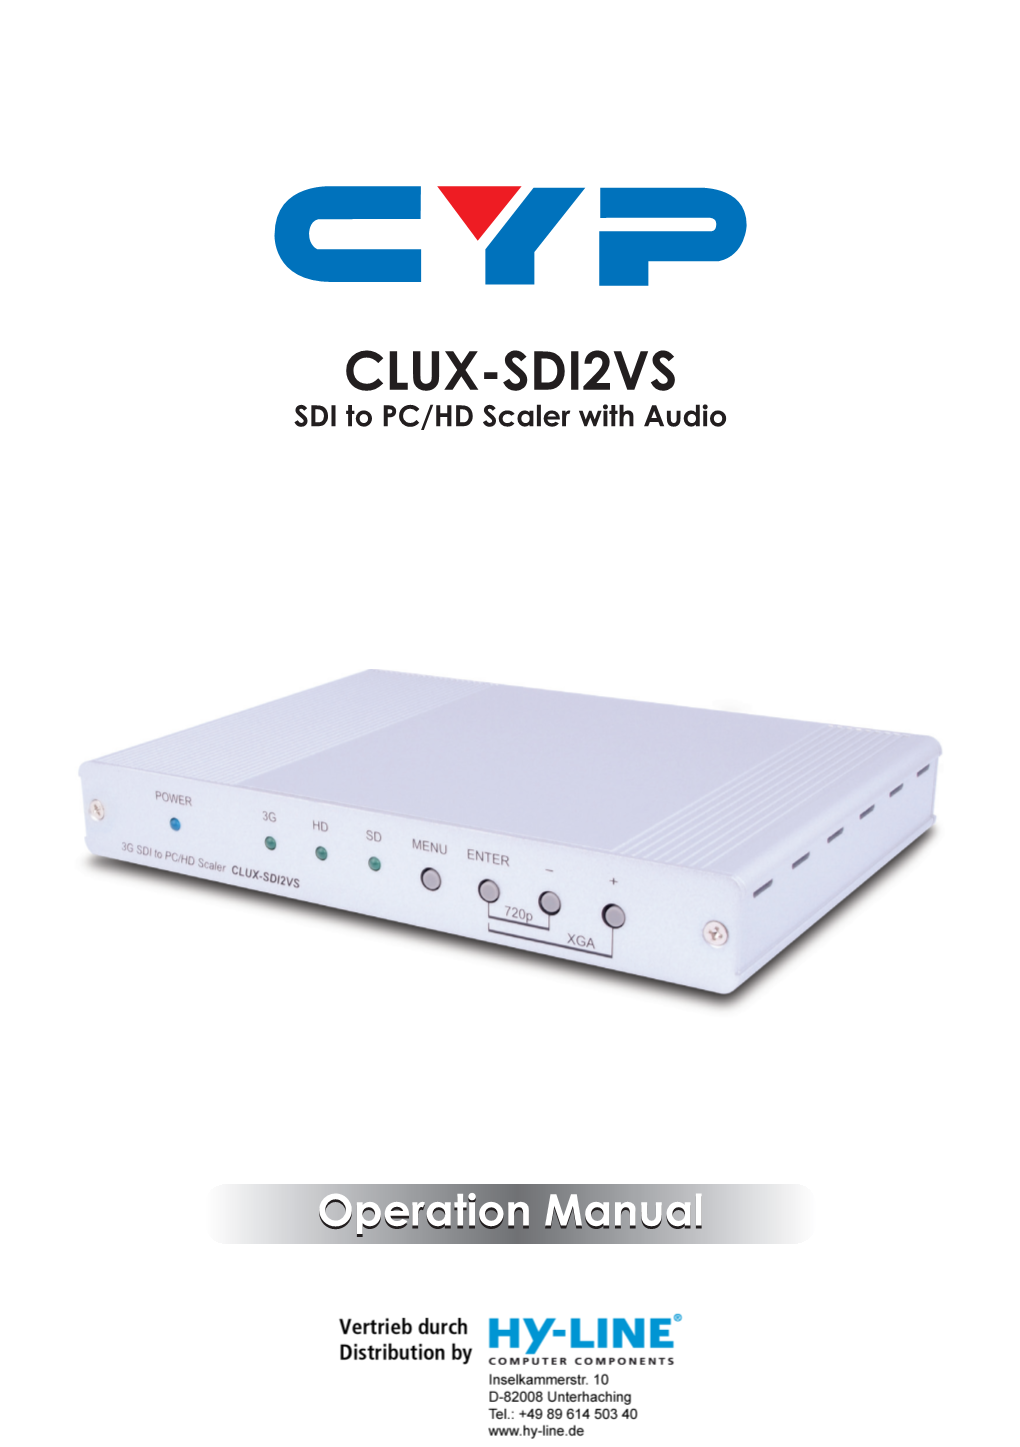 CLUX-SDI2VS SDI to PC/HD Scaler with Audio